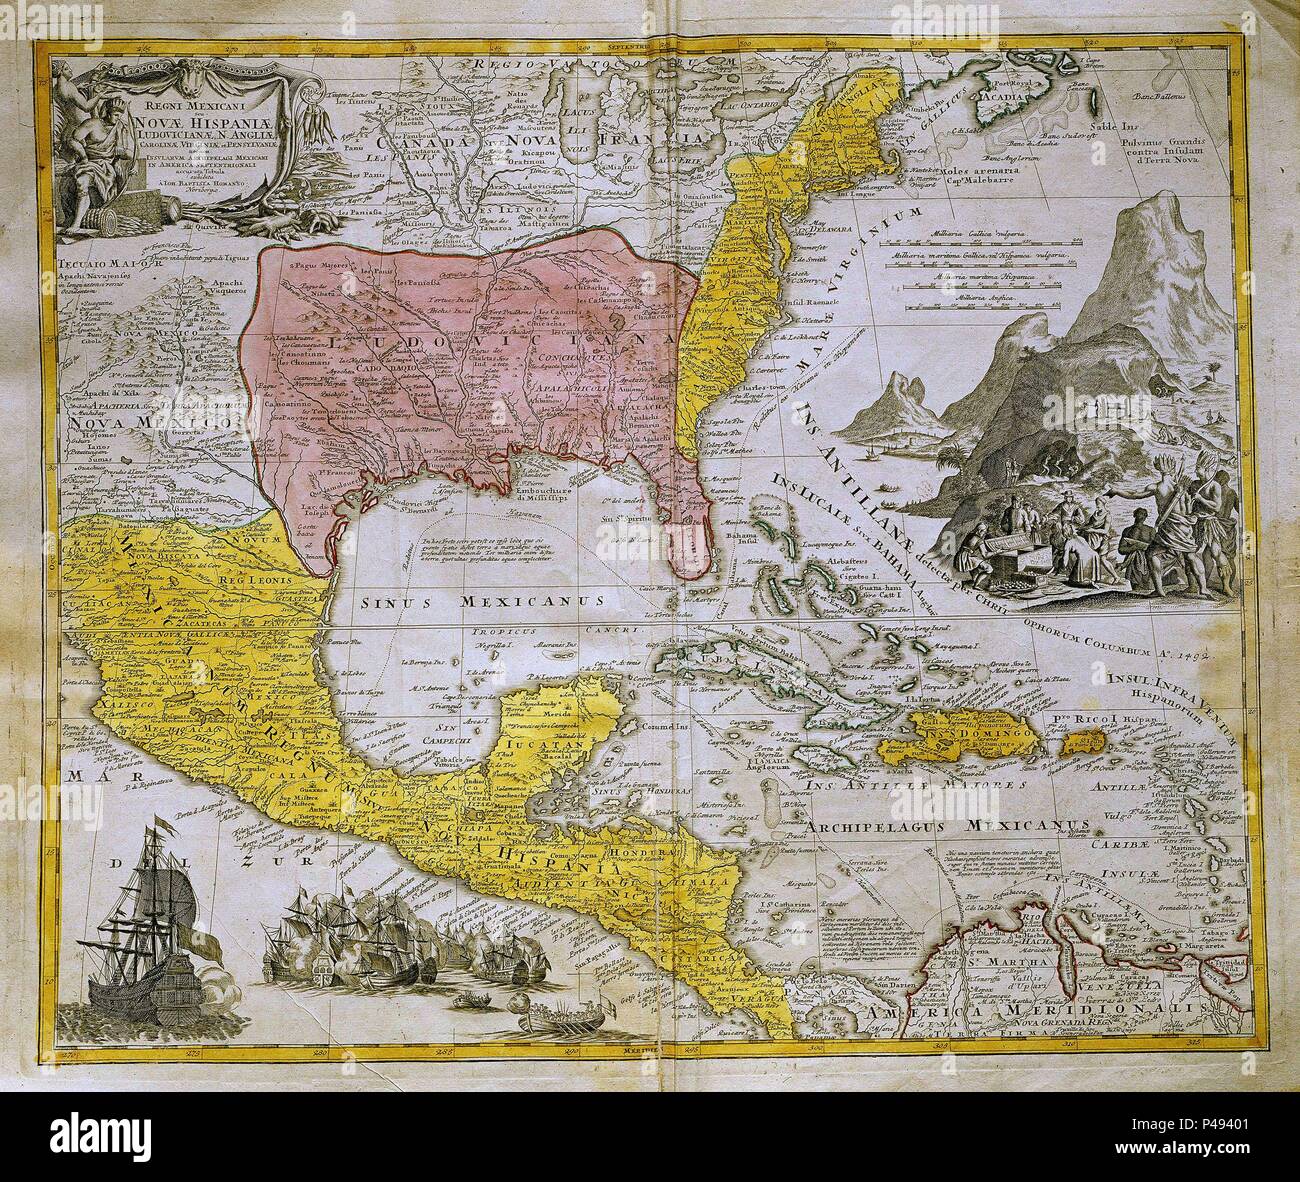 REGNI MEXICANI NOVA HISPANIAE - 1740. Author: Johann Baptista Homann (1664-1724). Location: SERVICIO GEOGRAFICO DEL EJERCITO, MADRID, SPAIN. Stock Photo